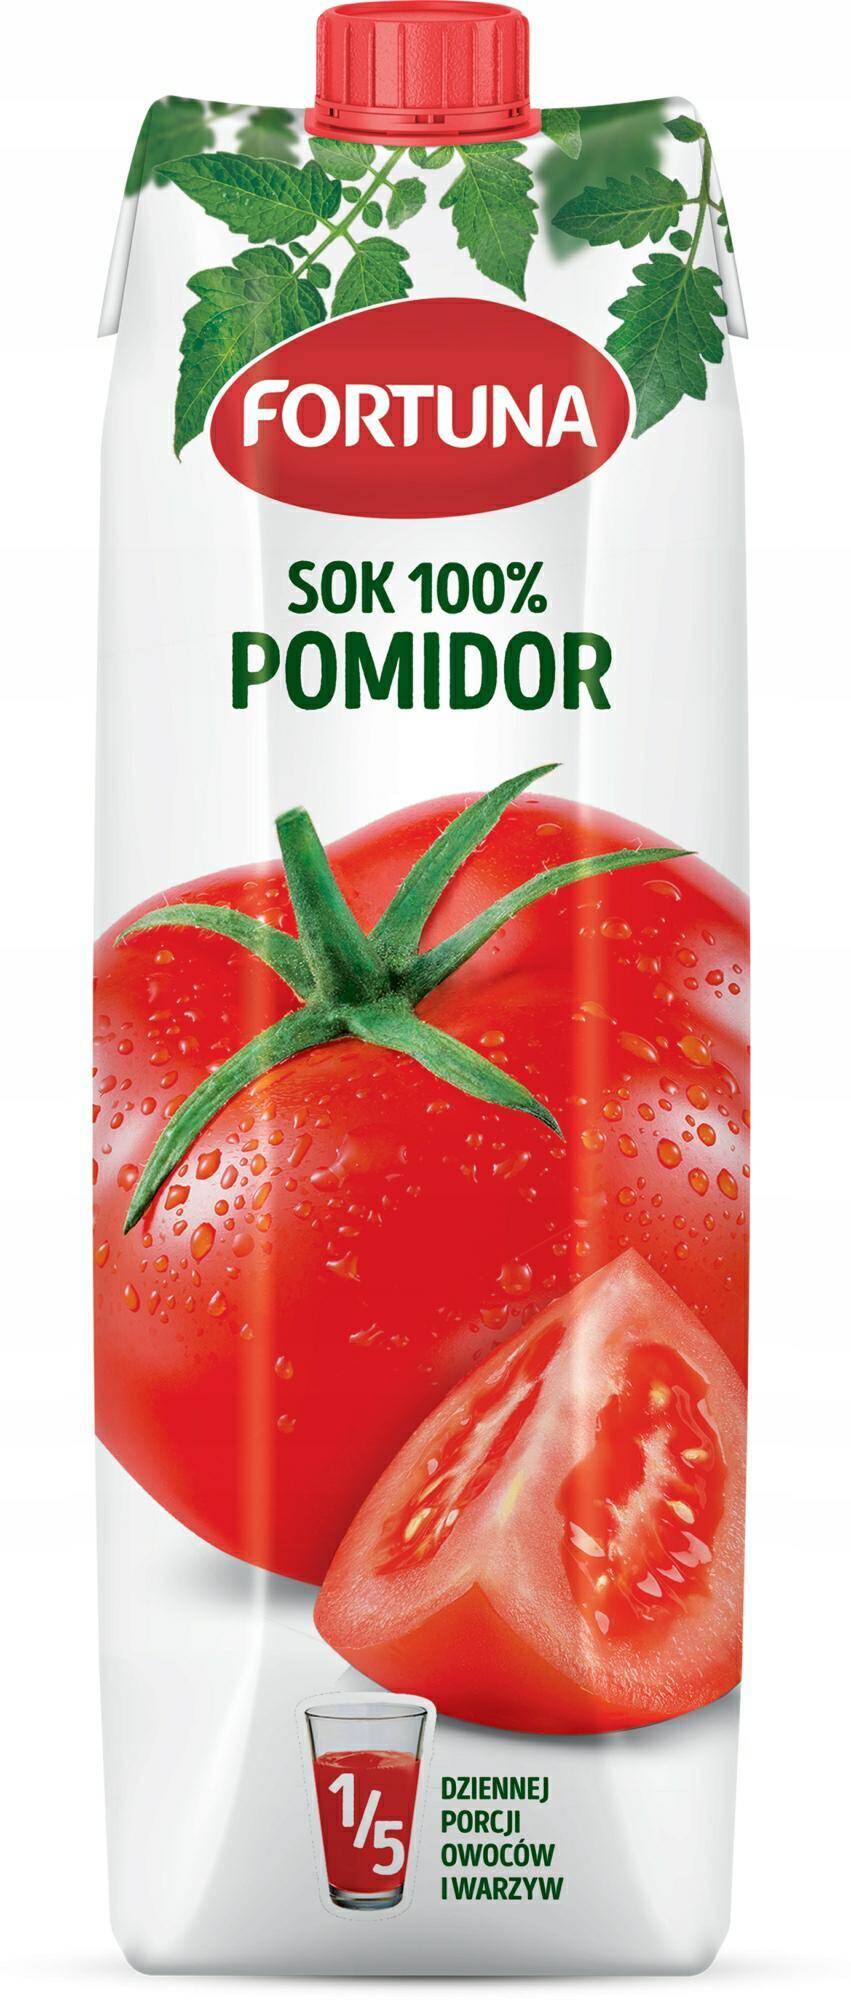 FORTUNA sok 100% pomidor 1l *12.